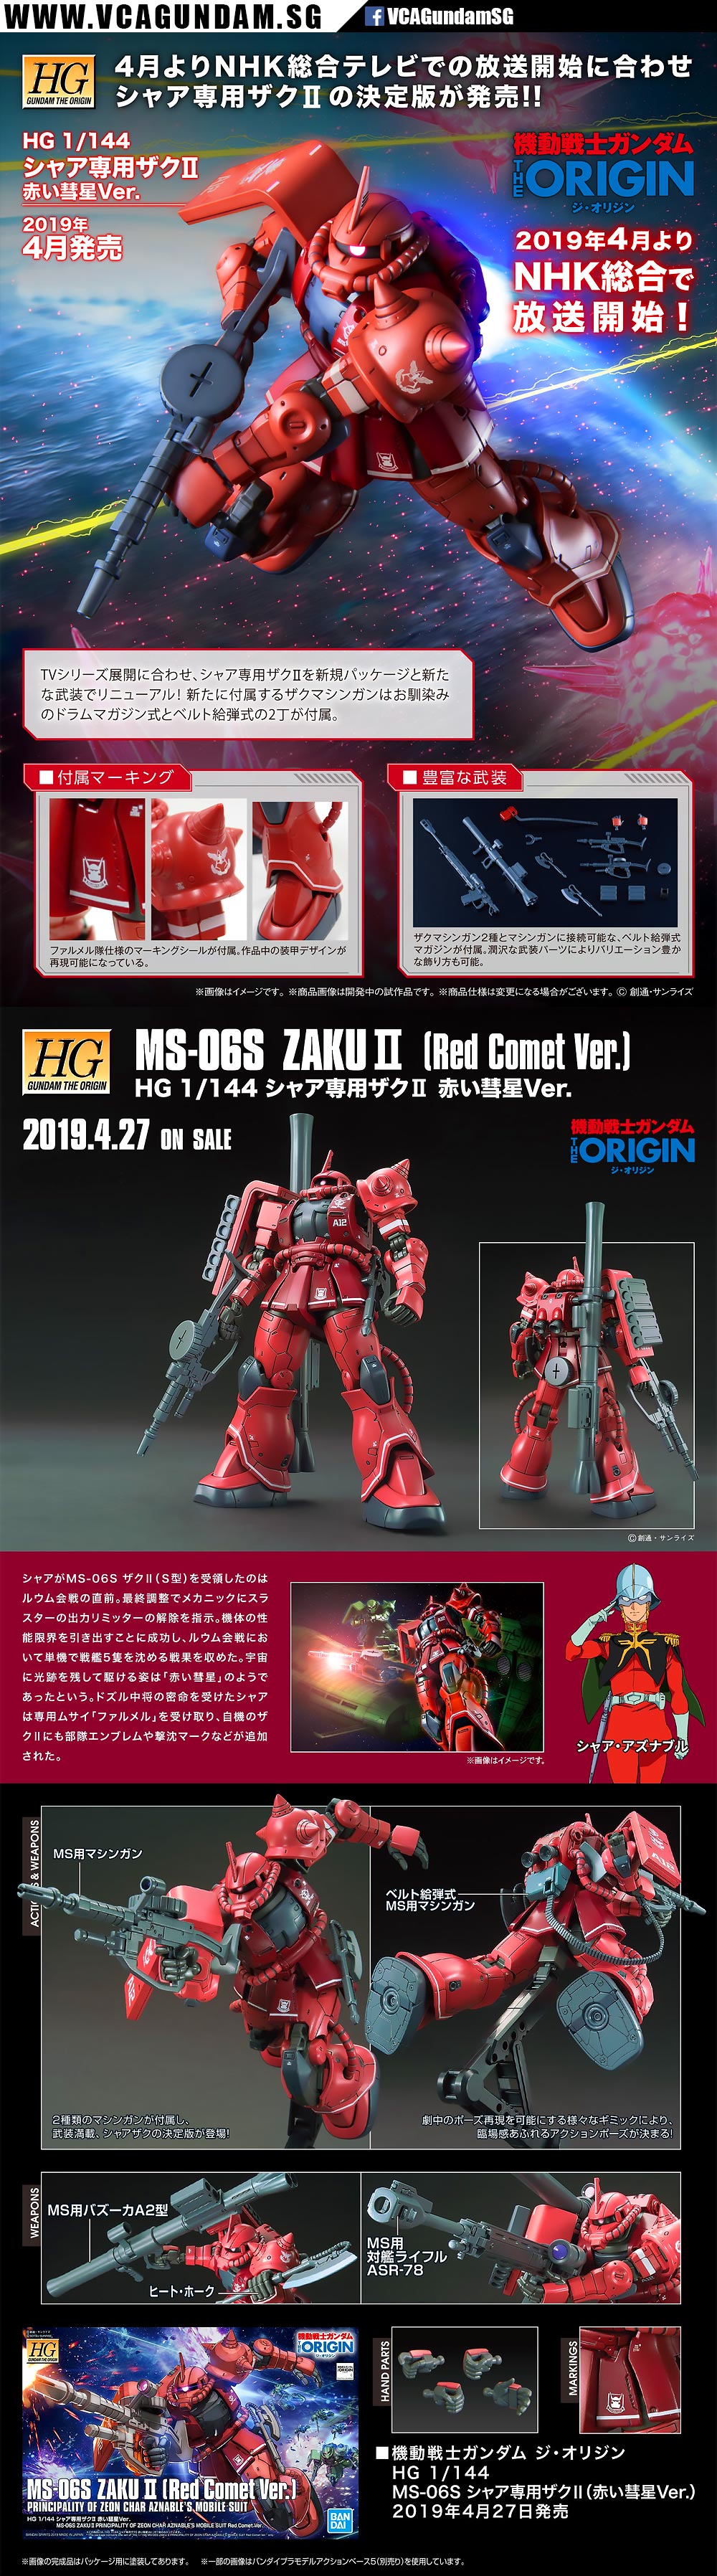 Bandai® Gunpla HG Origin MS-06S ZAKU II (RED COMET VER) Specification